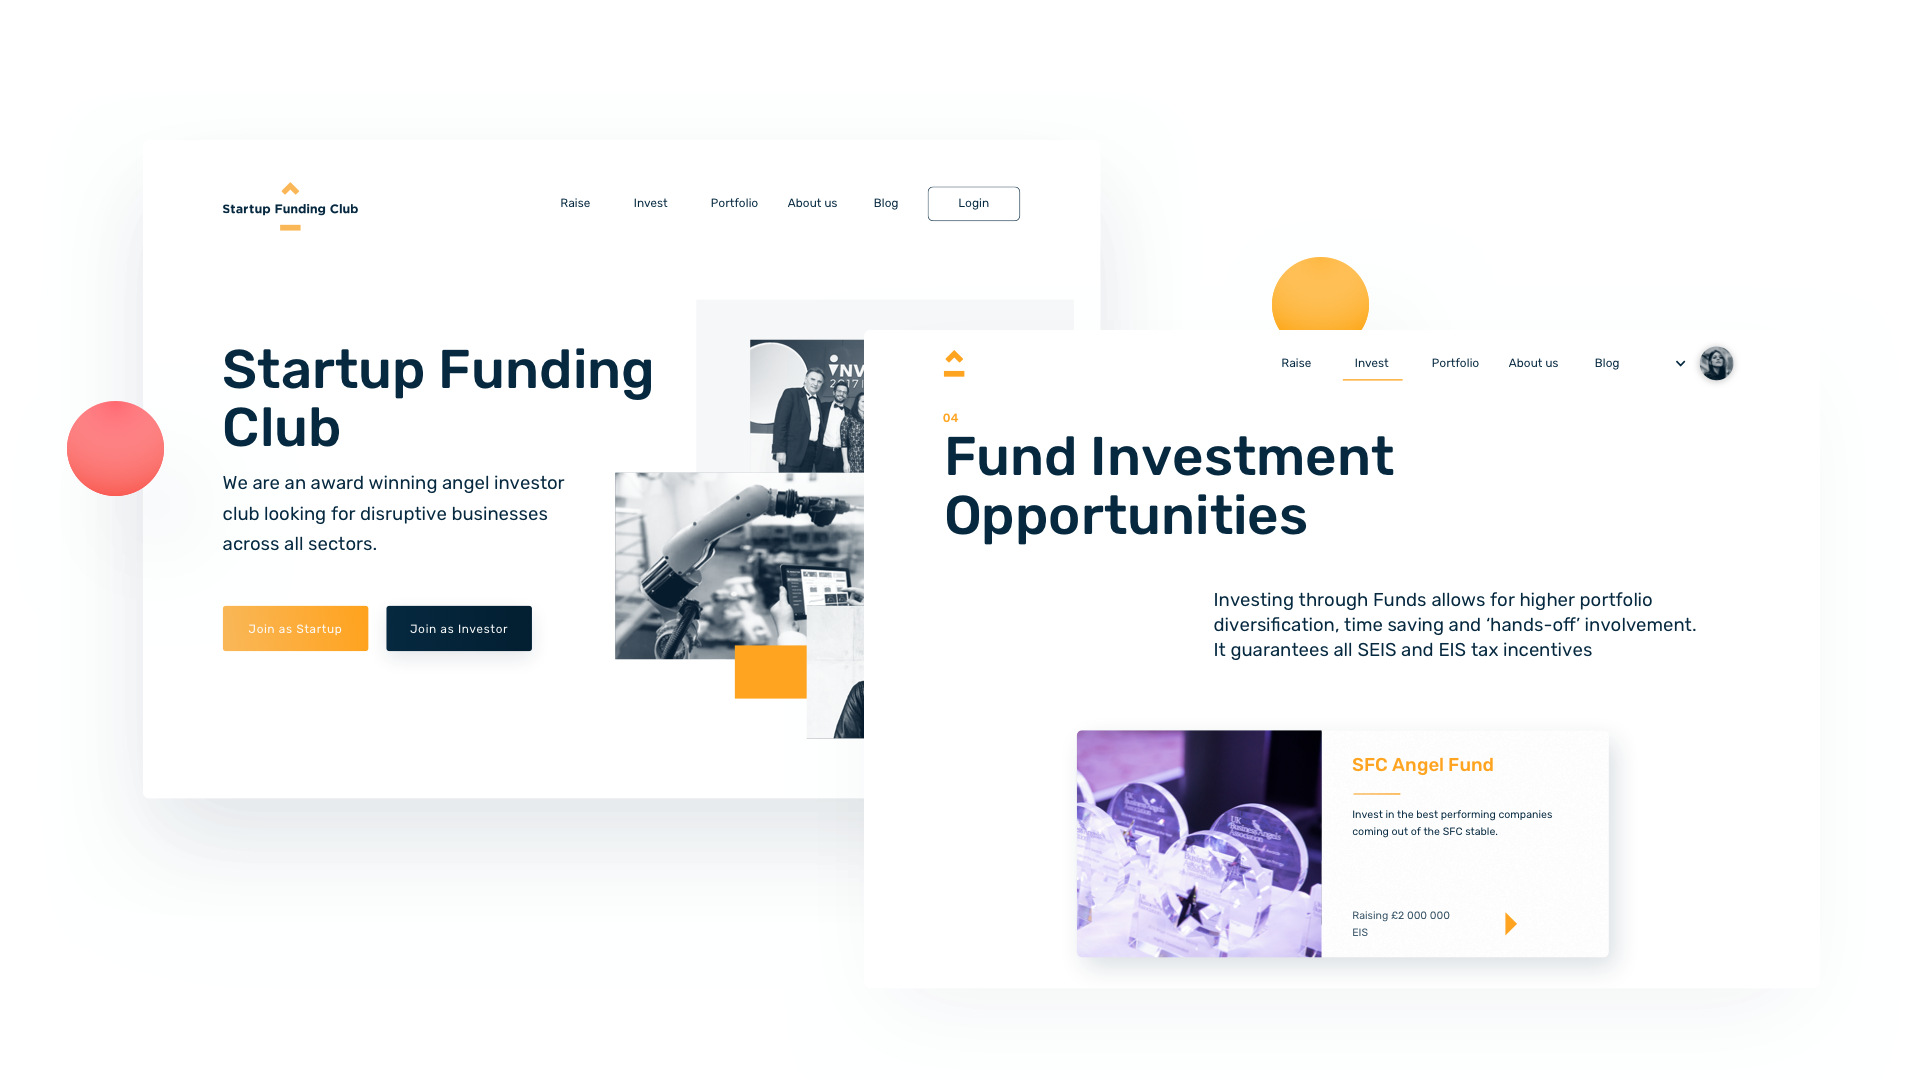 marcin romaniuk UI design startup funding club